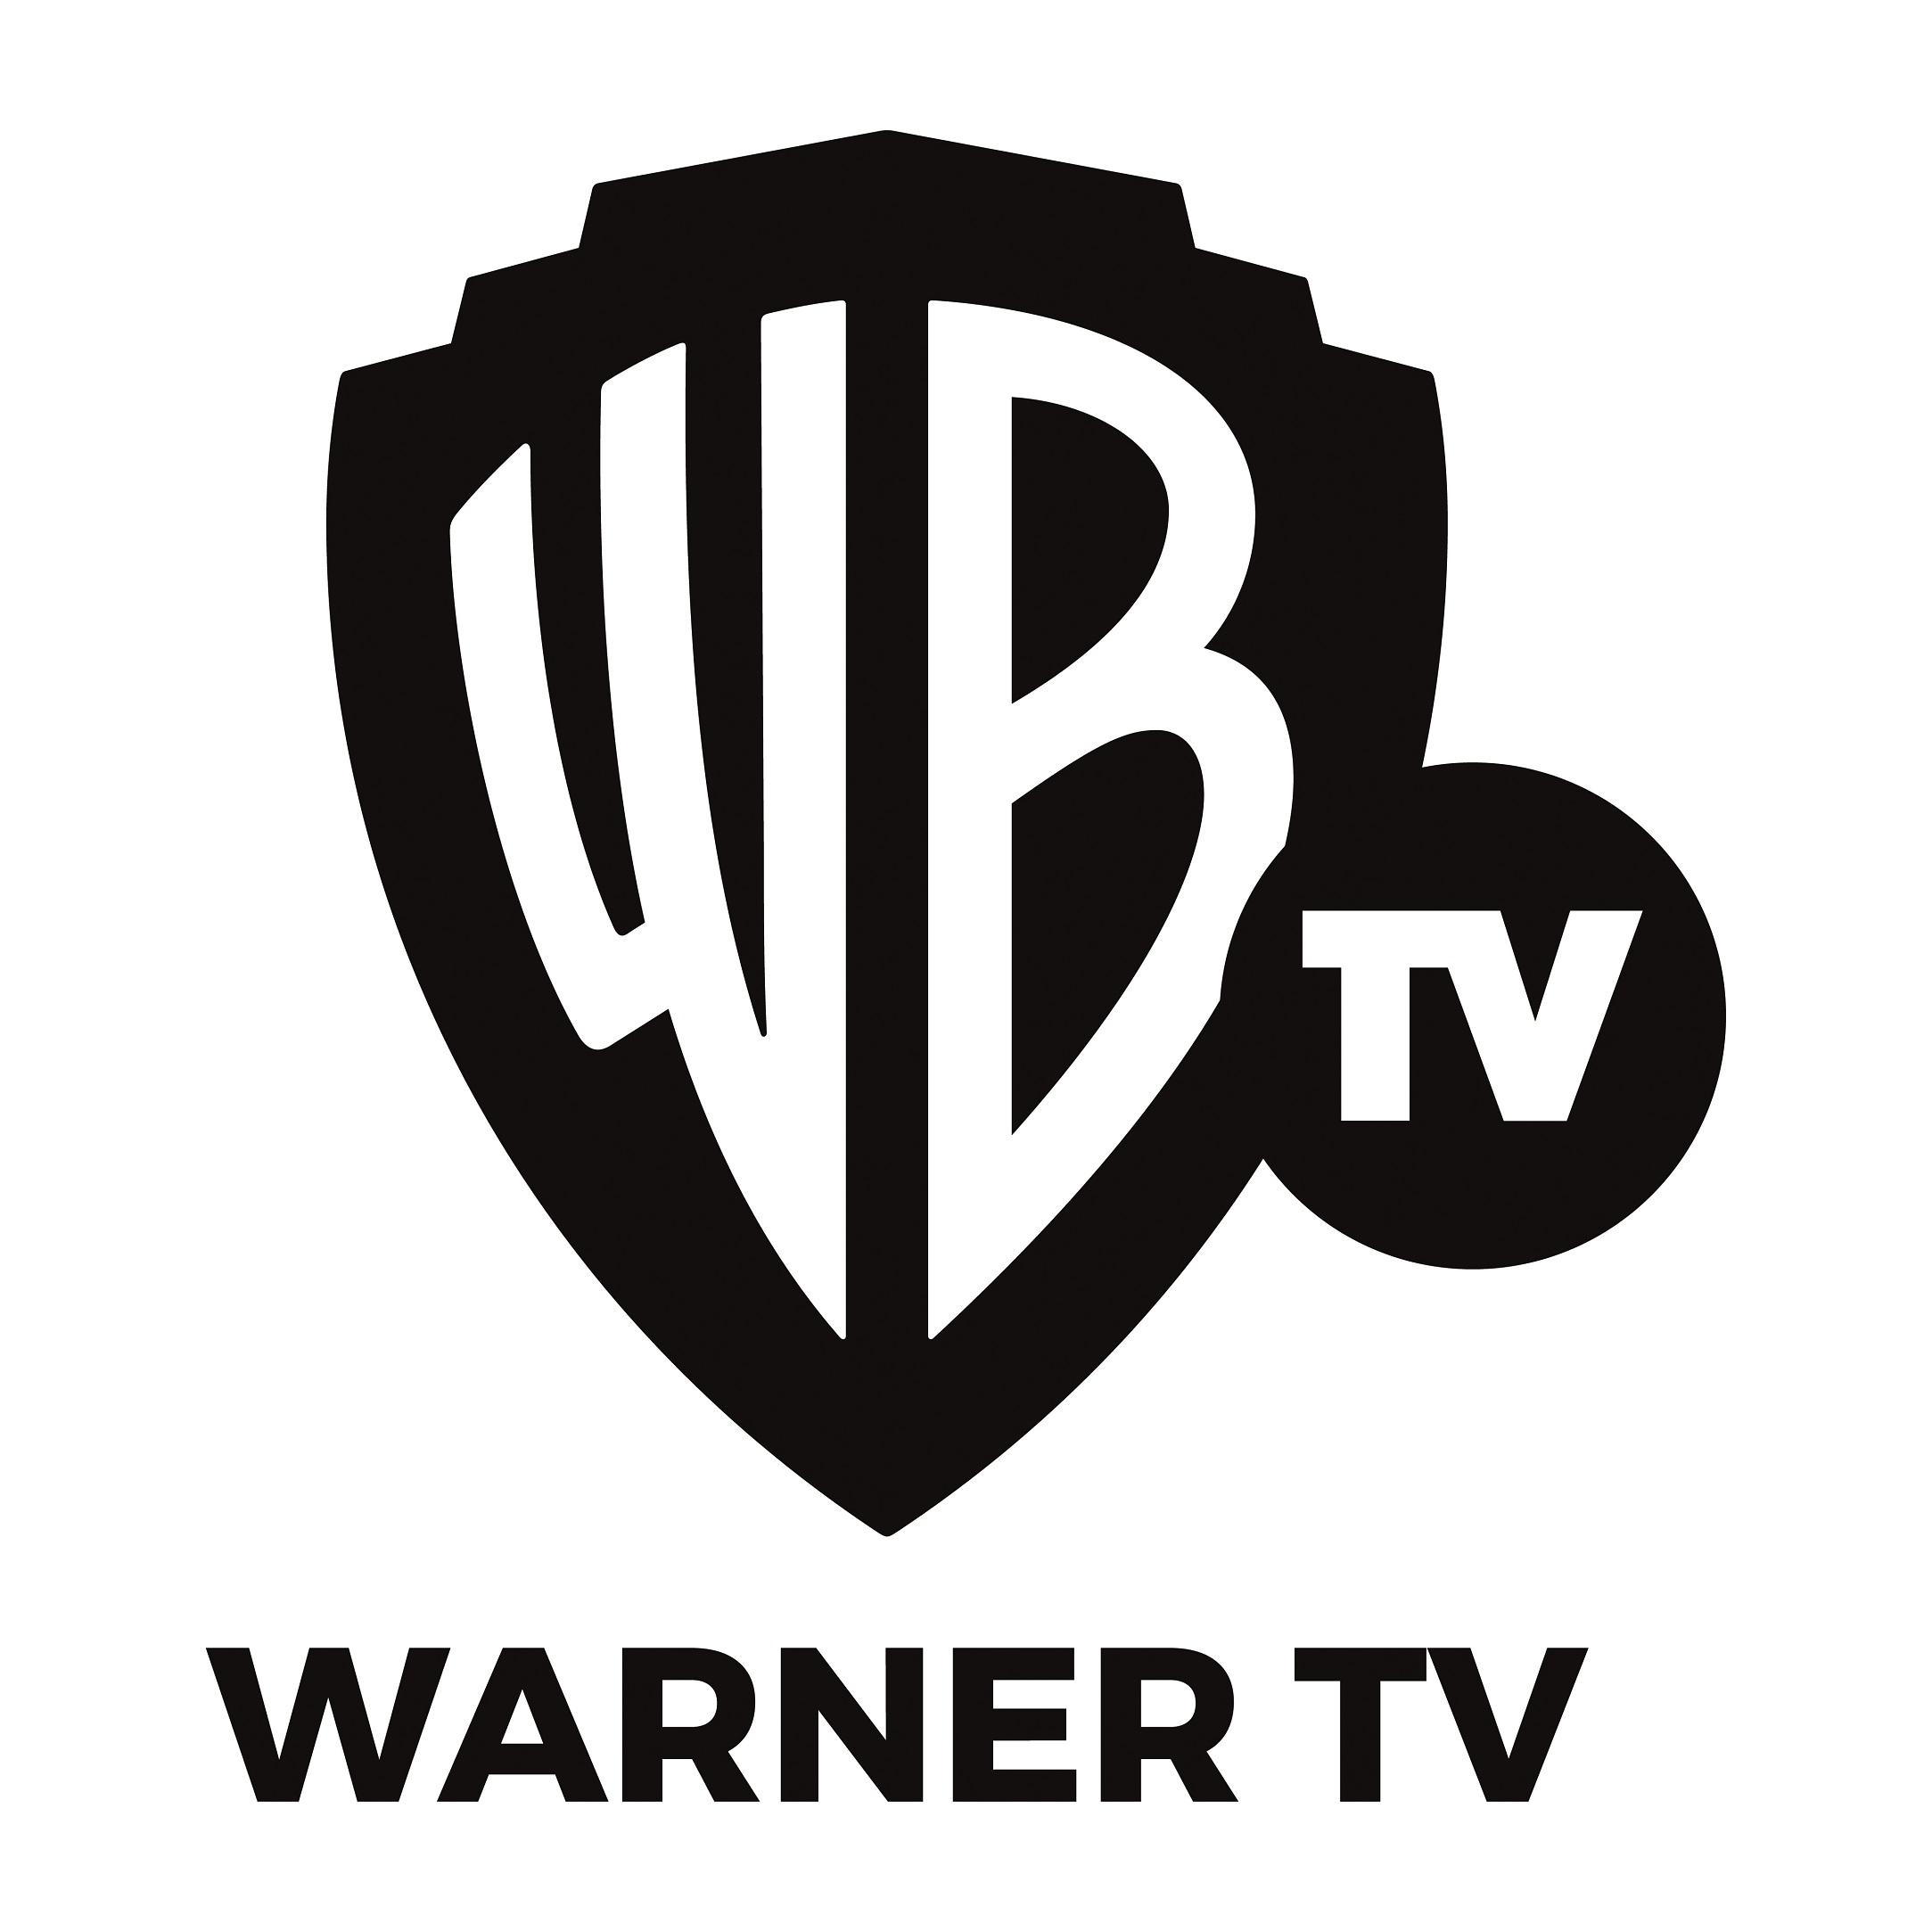 WBTV WARNERTV LOGO BLACK